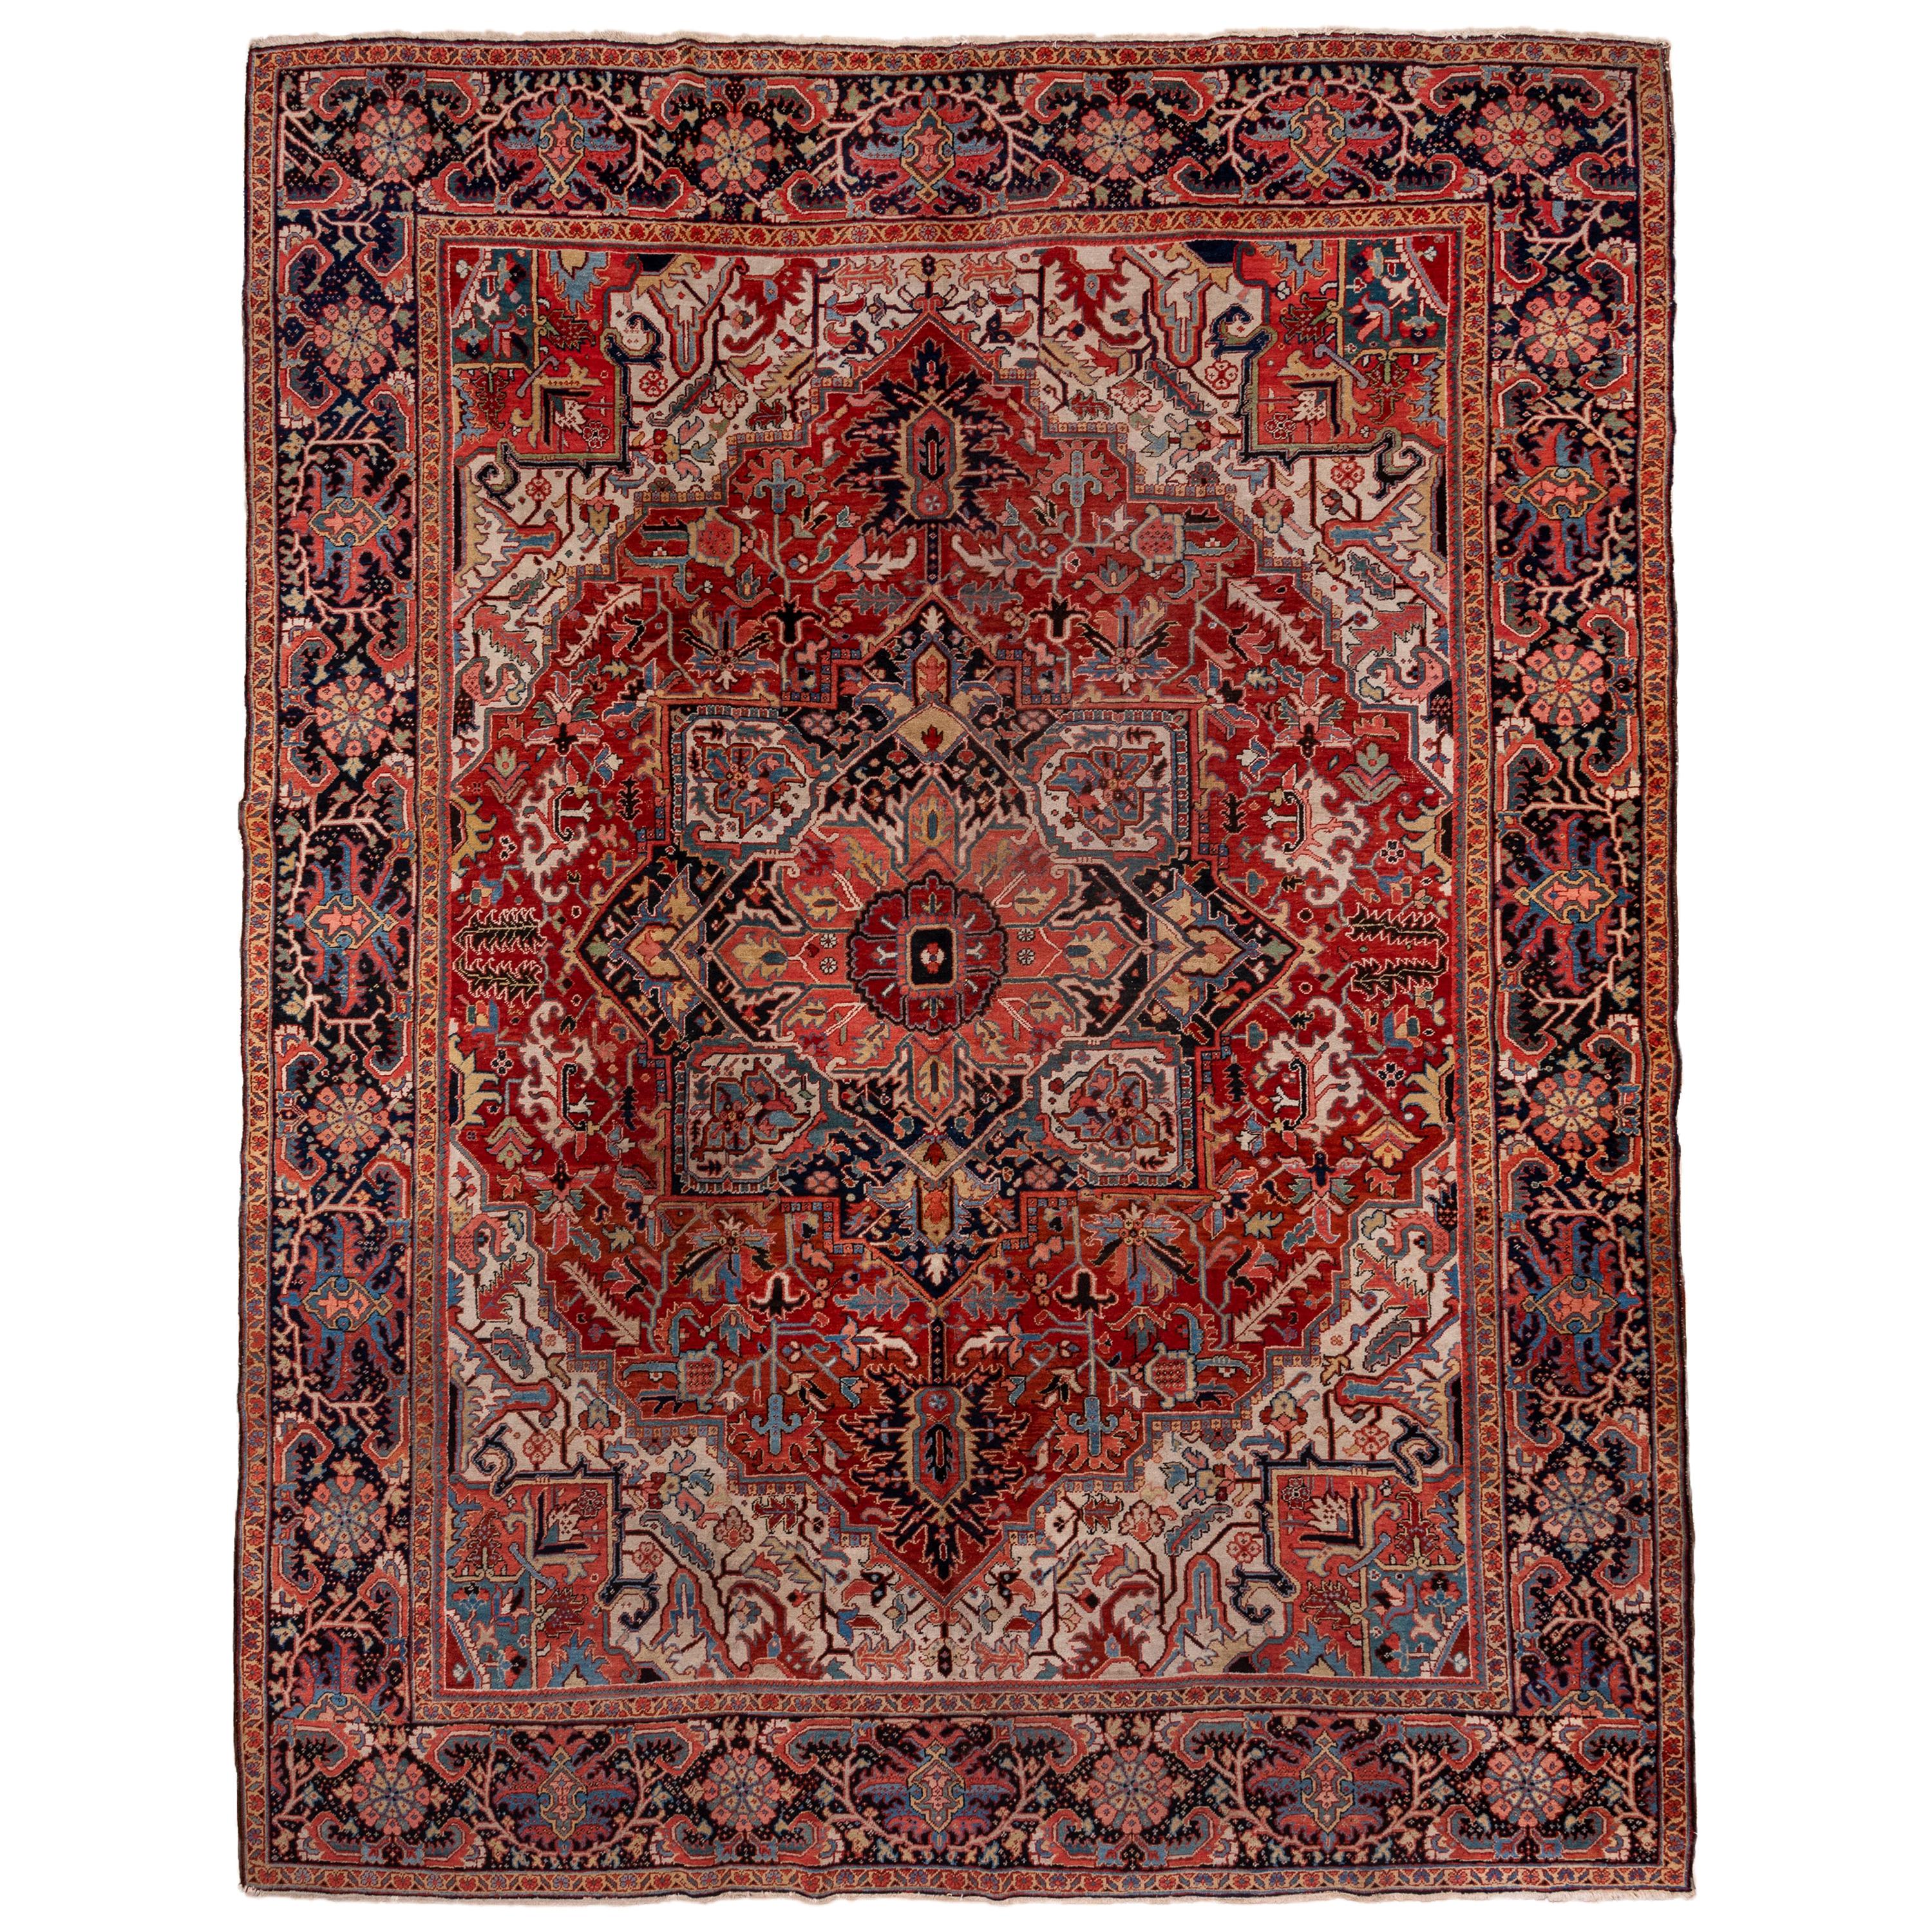 Bright Red Field Antique Persian Heriz Carpet For Sale